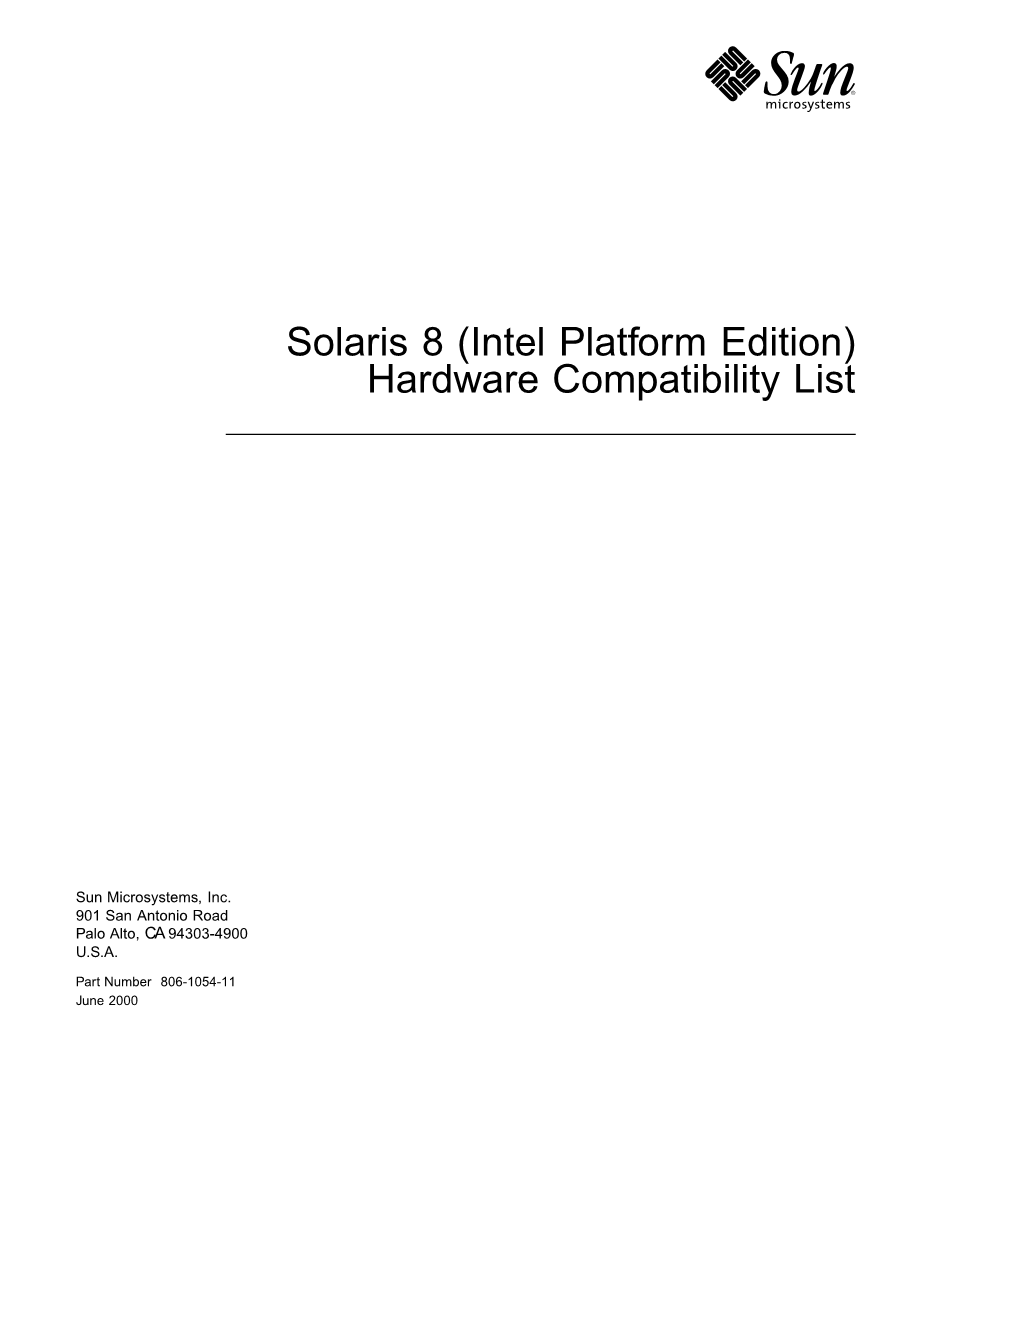 Solaris 8 (Intel Platform Edition) Hardware Compatibility List